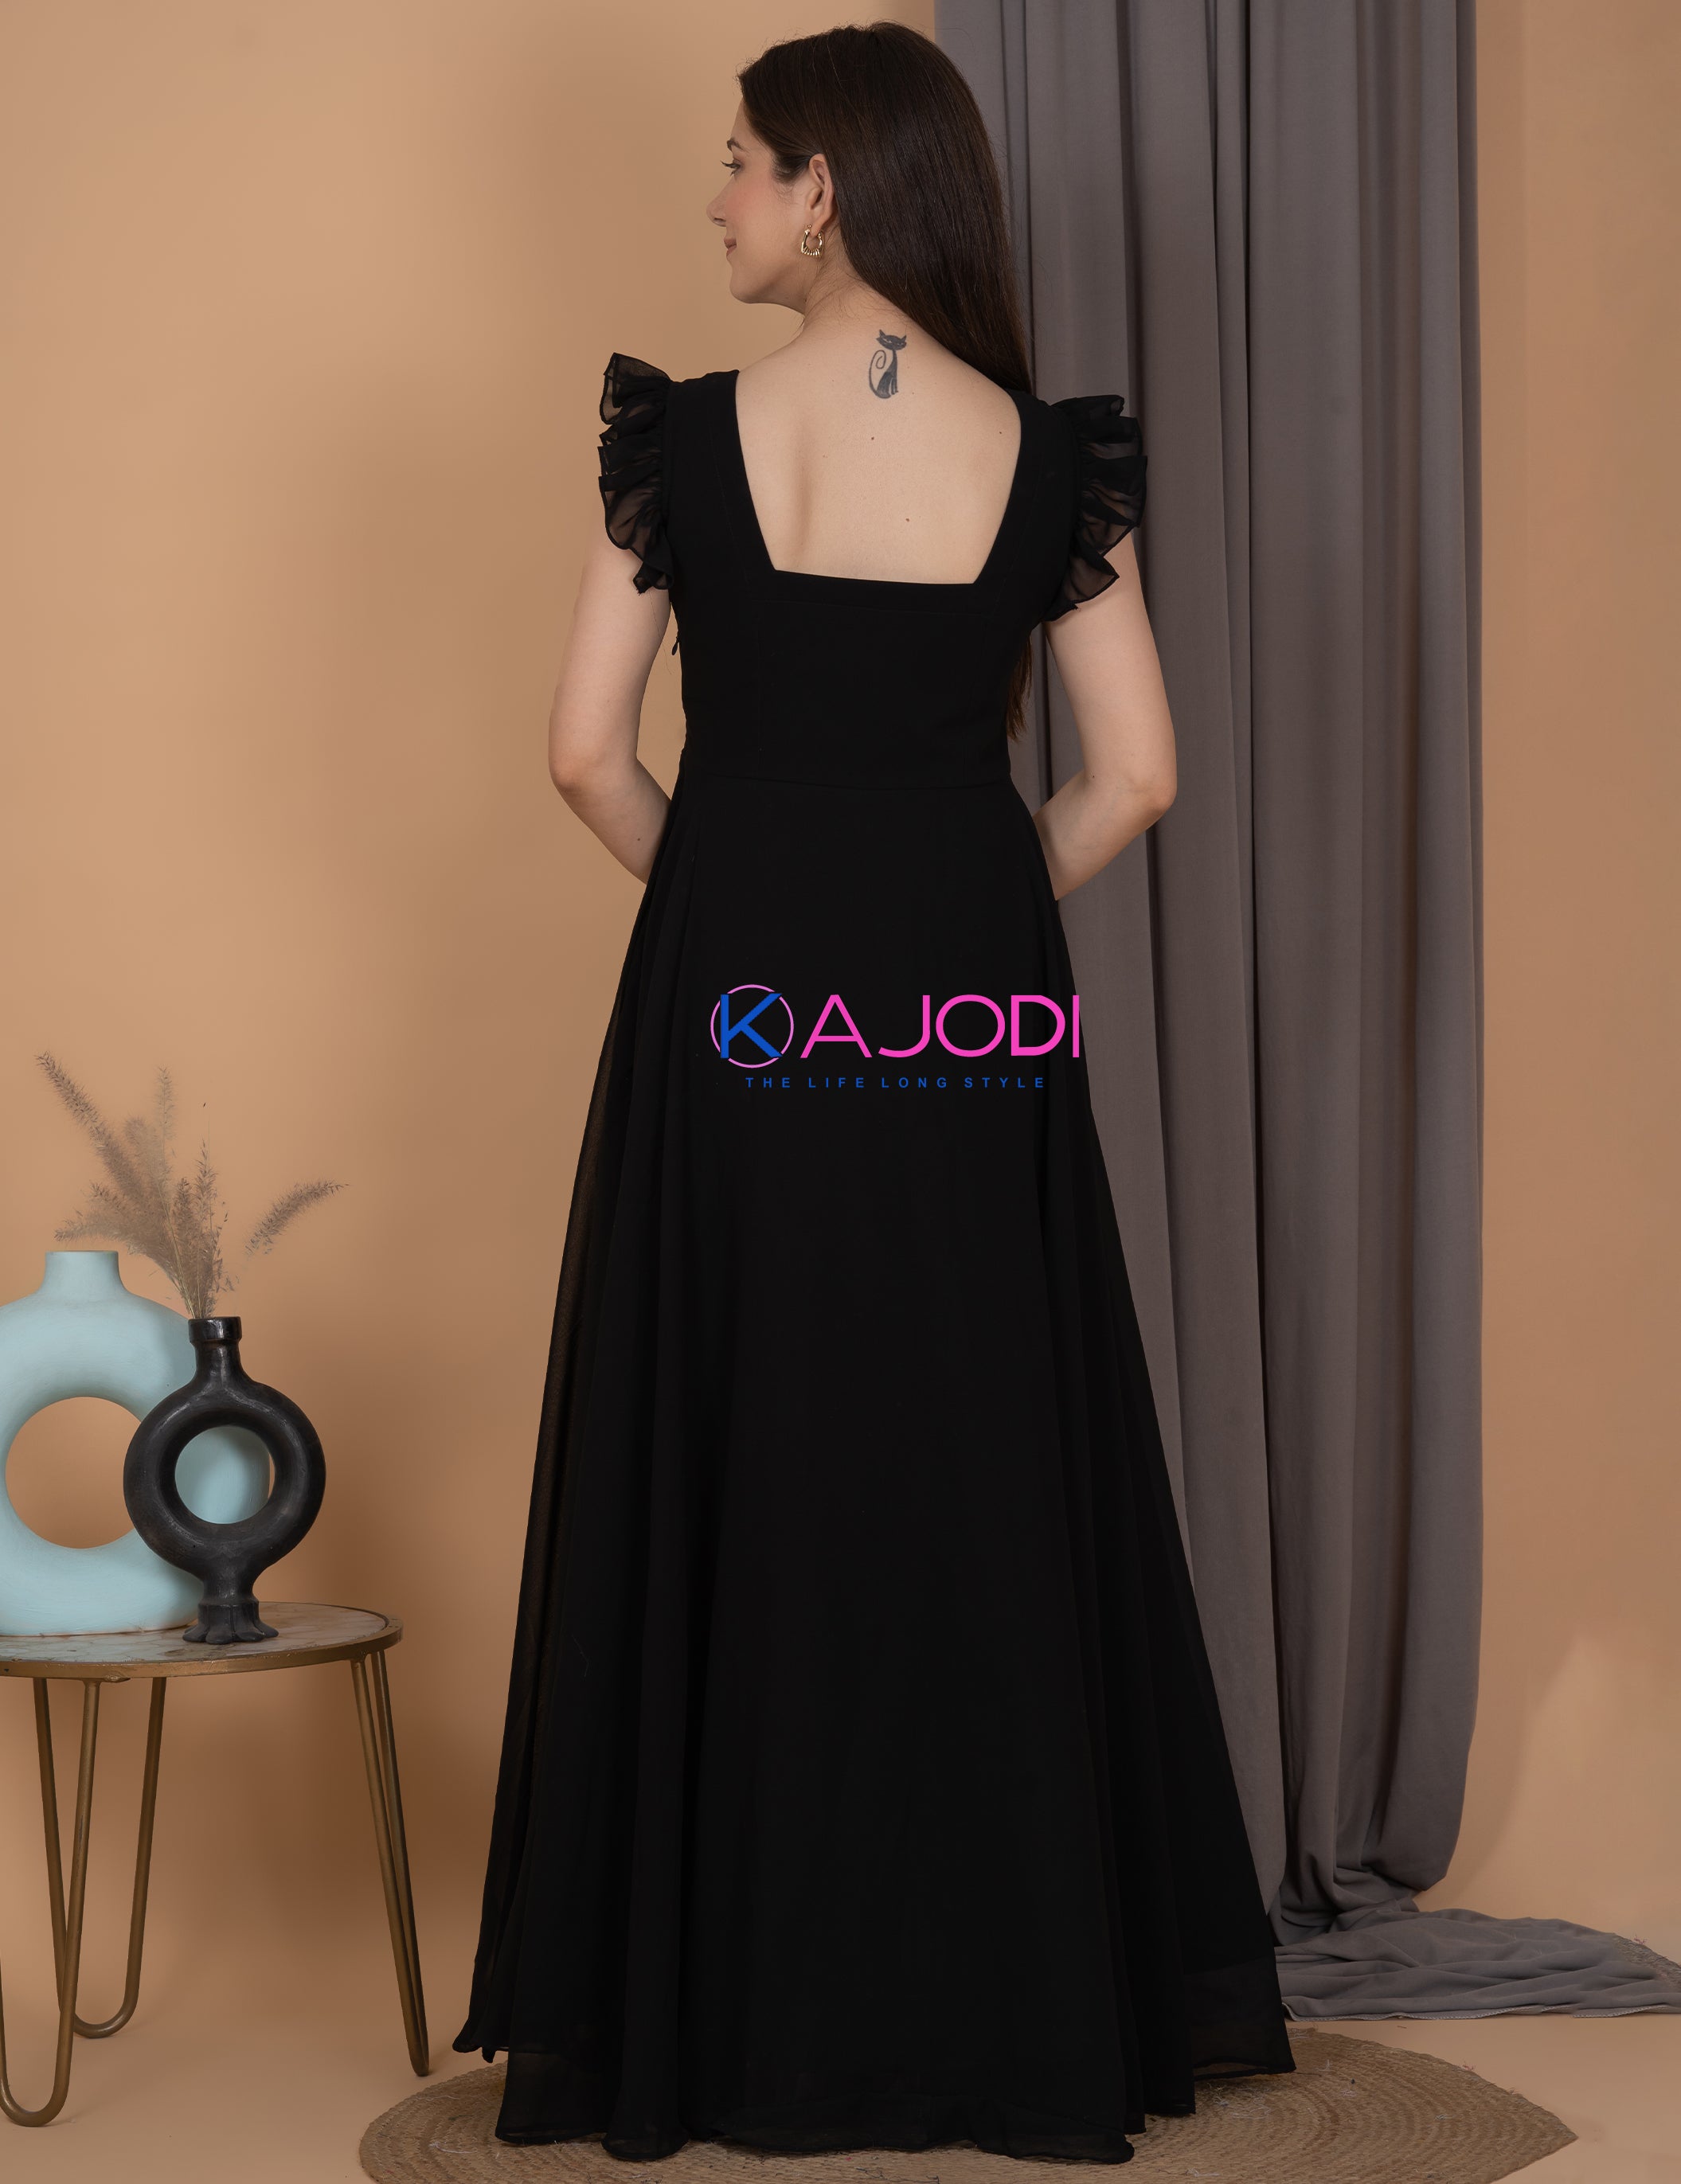 Sparkly Black Long Dress.